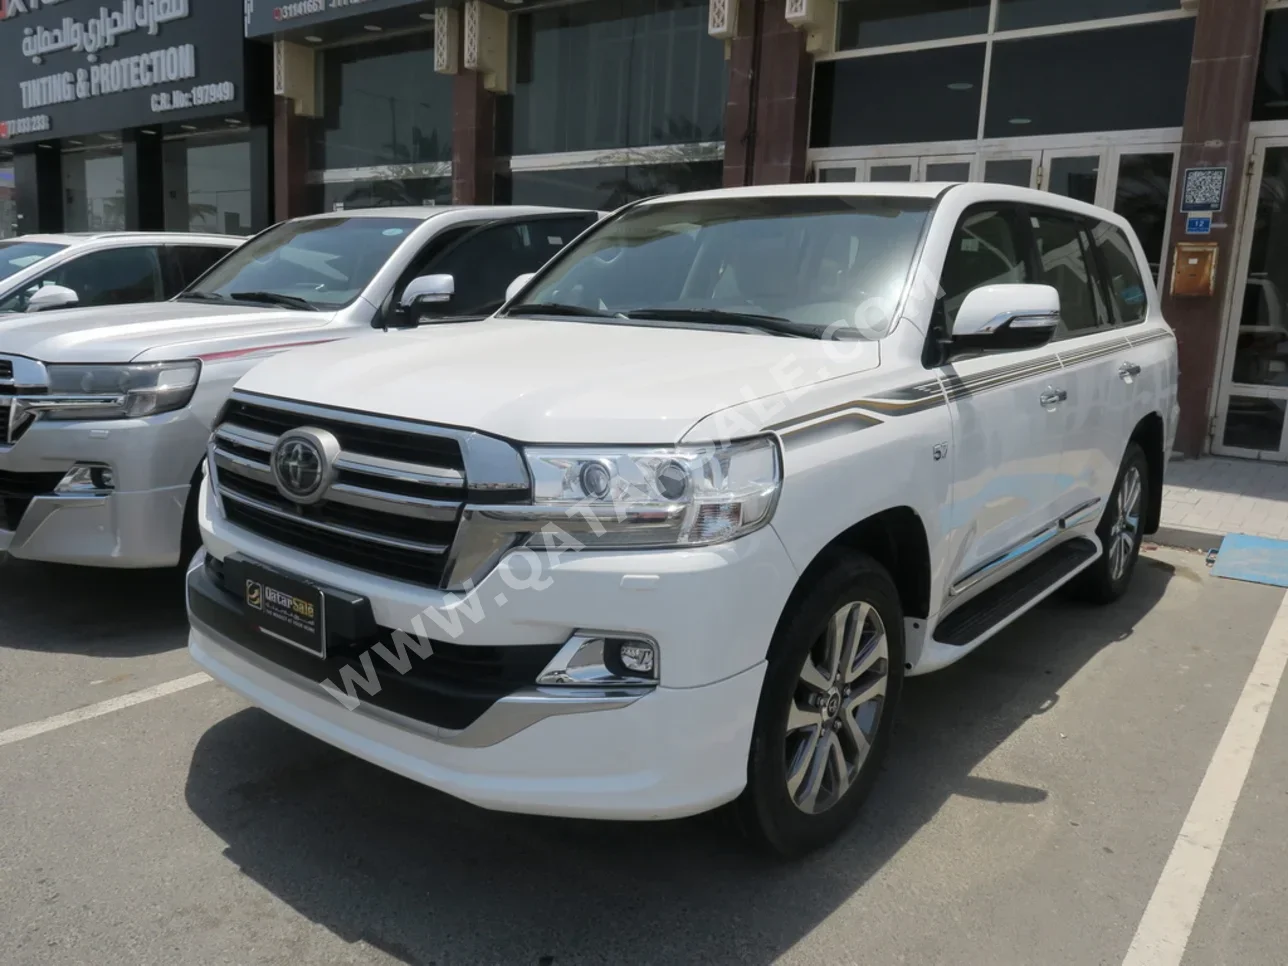 Toyota  Land Cruiser  VXR  2019  Automatic  220,000 Km  8 Cylinder  Four Wheel Drive (4WD)  SUV  White